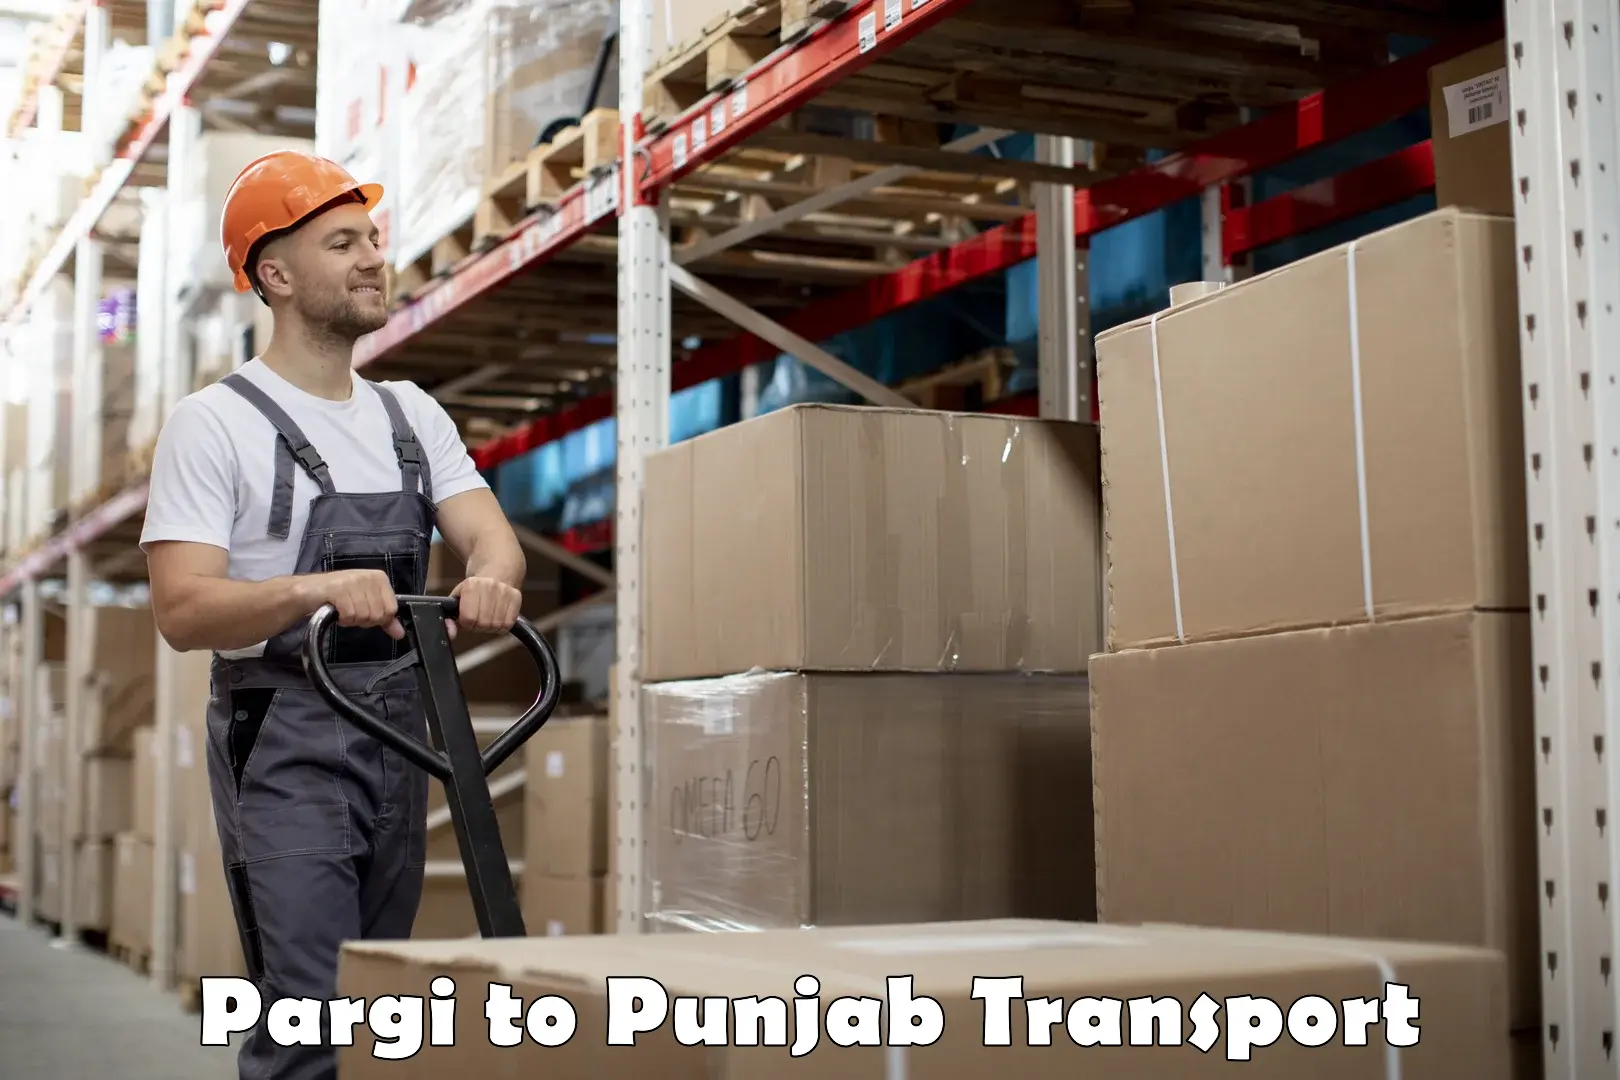 Nearby transport service Pargi to Punjab